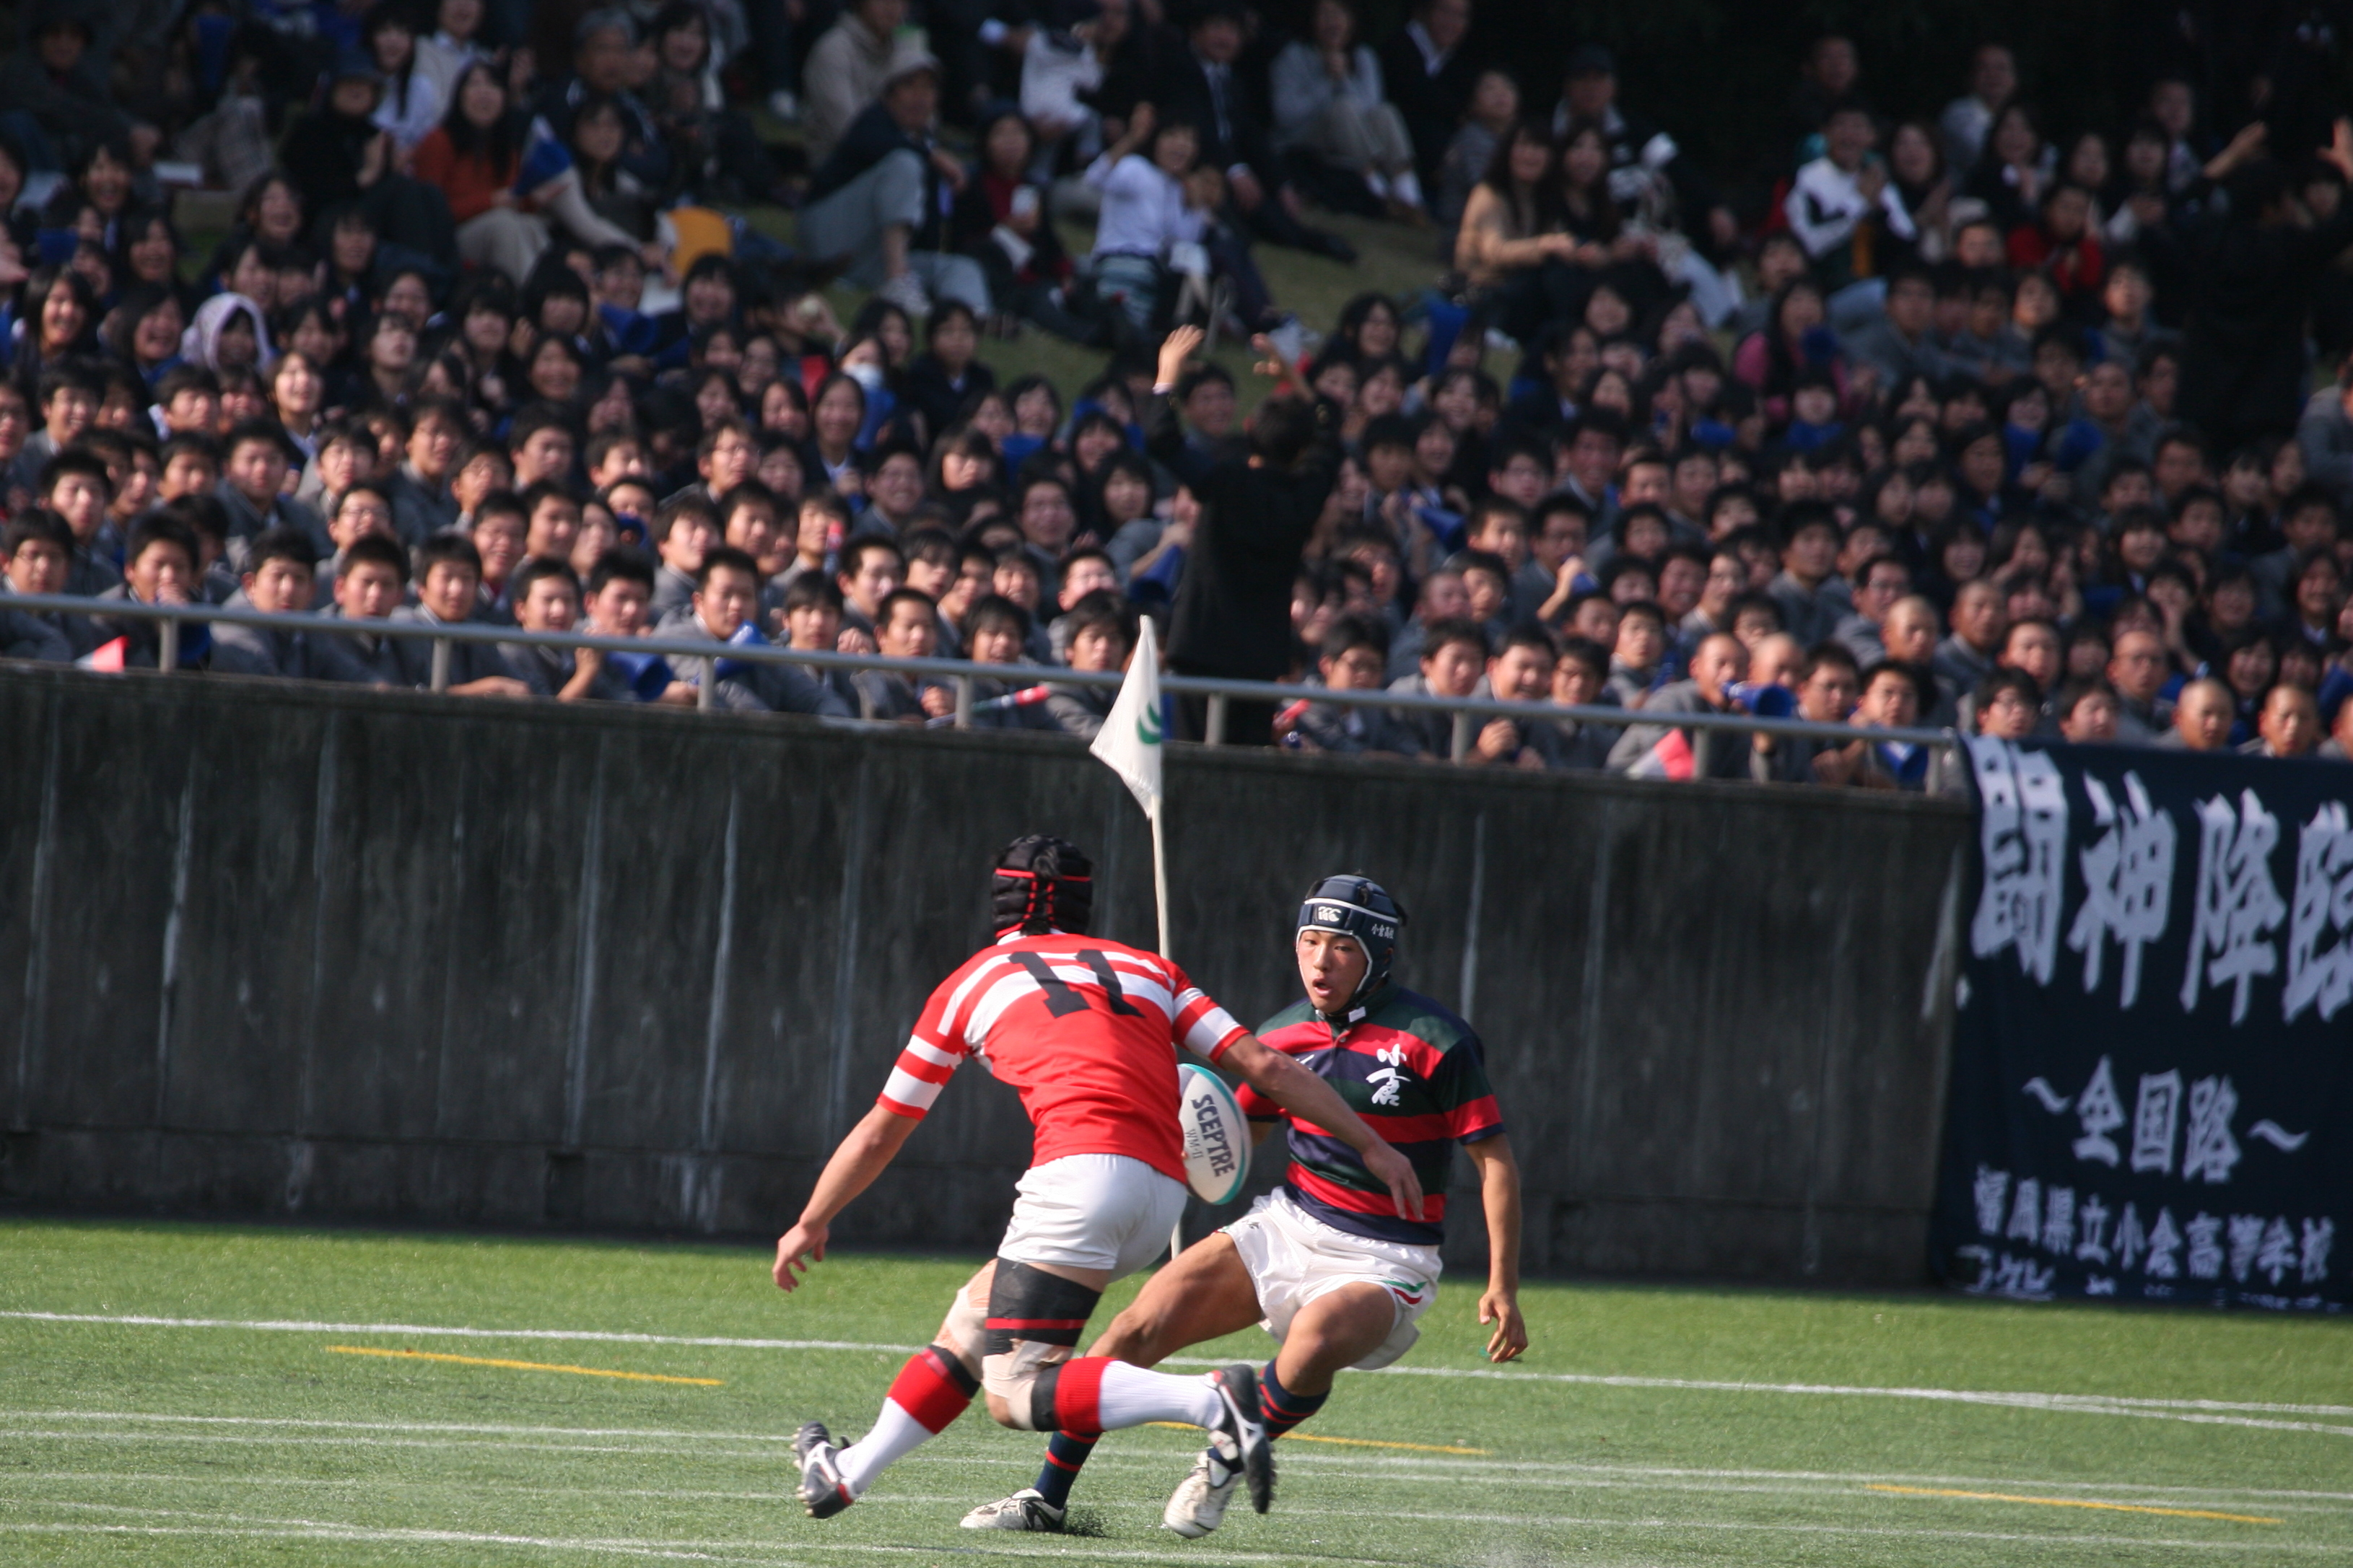 http://kokura-rugby.sakura.ne.jp/2010.11.7-5.JPG